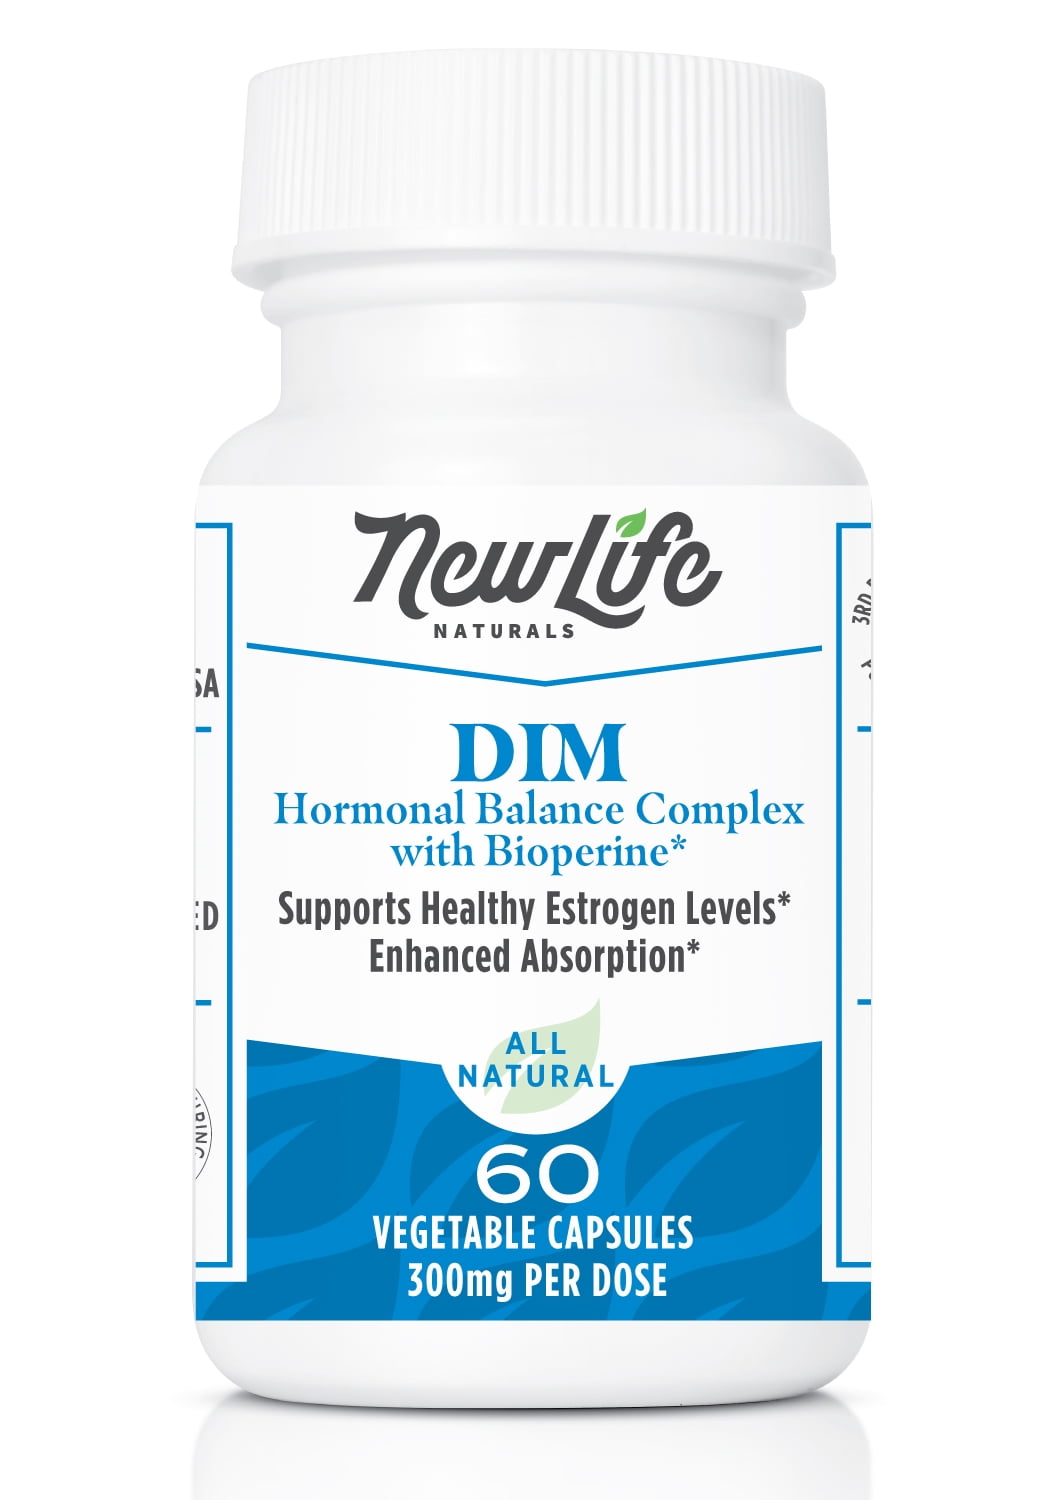 DIM Supplement for women